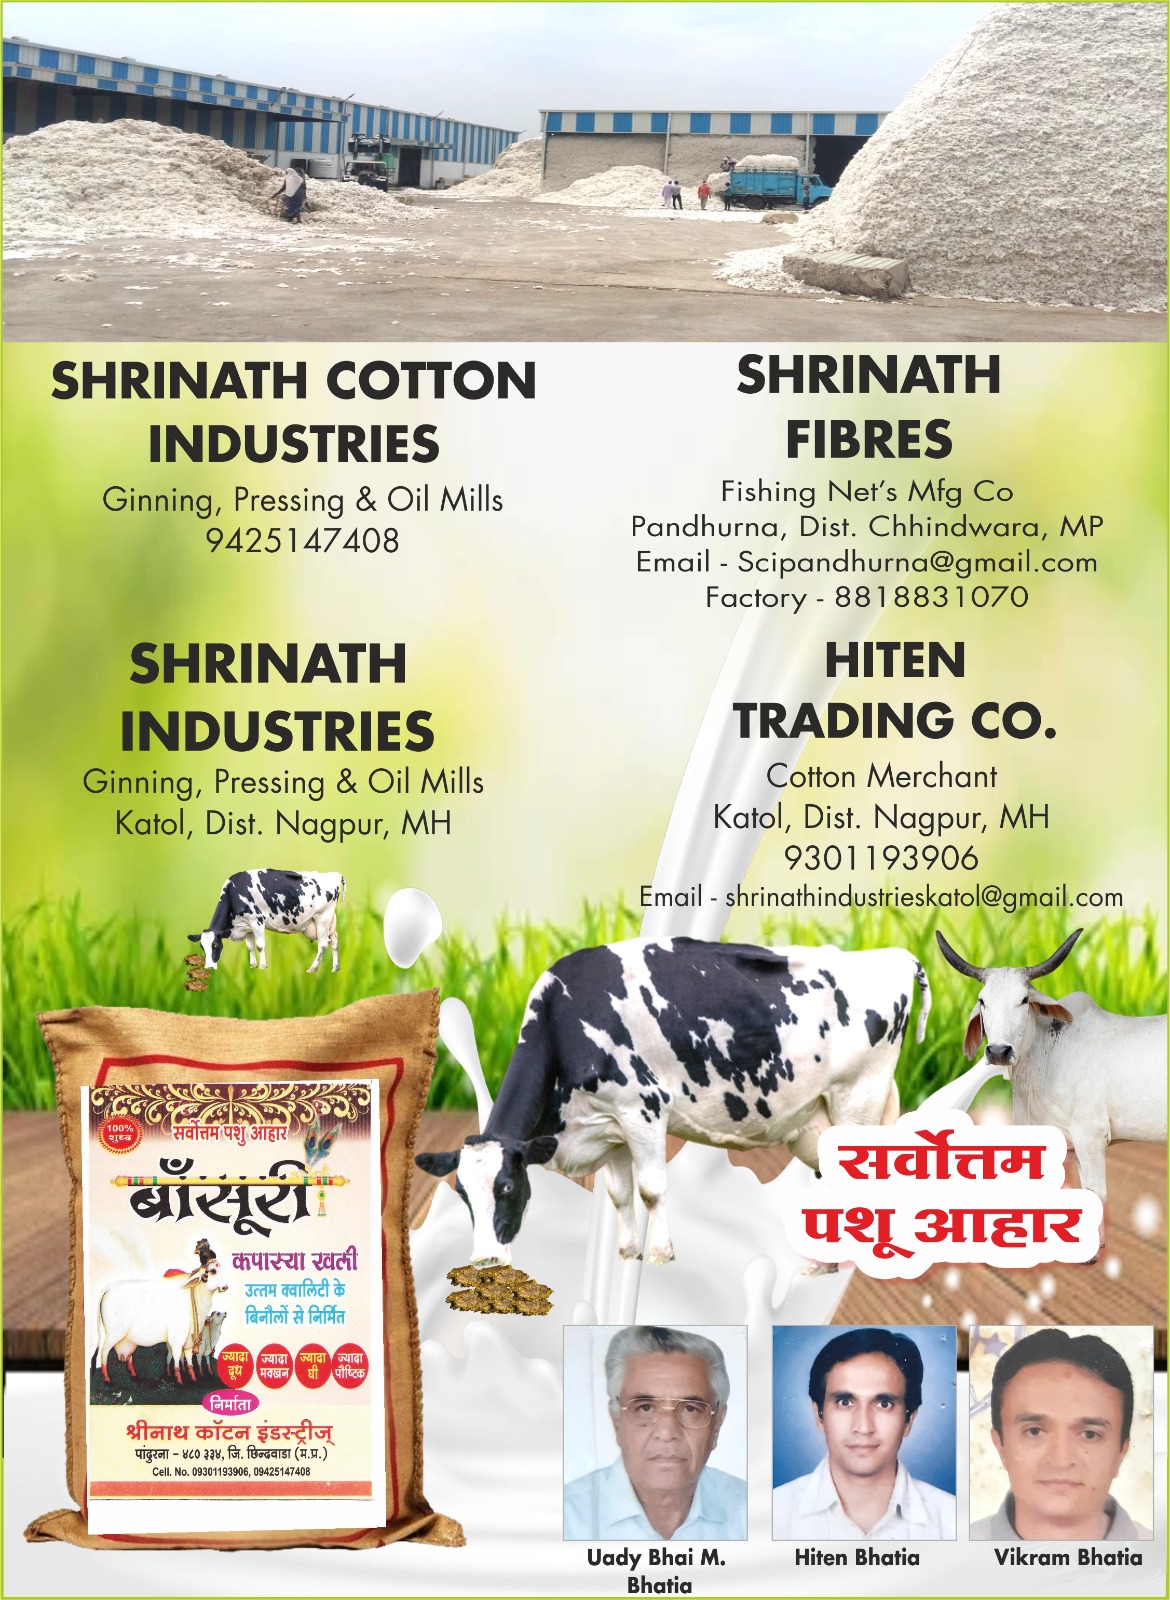 Shrinath Cotton Industries